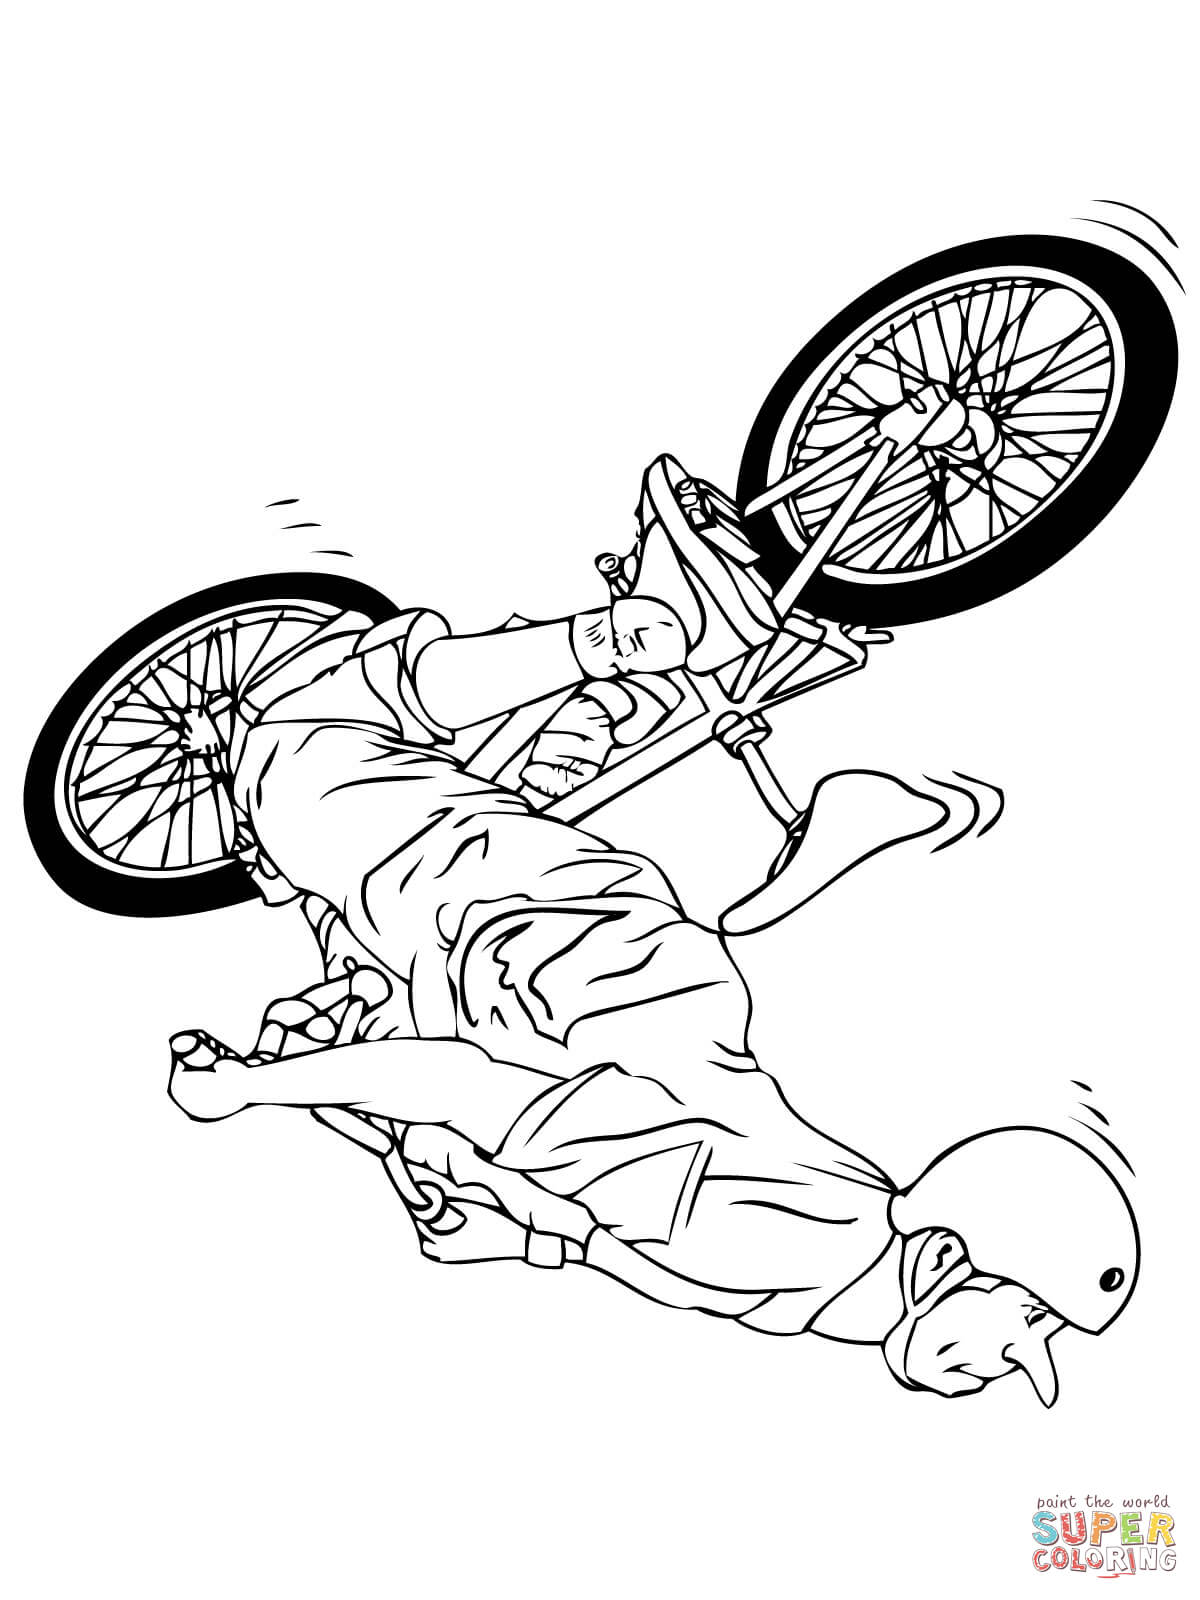 BMX Flipwhip - BMX Biker coloring page